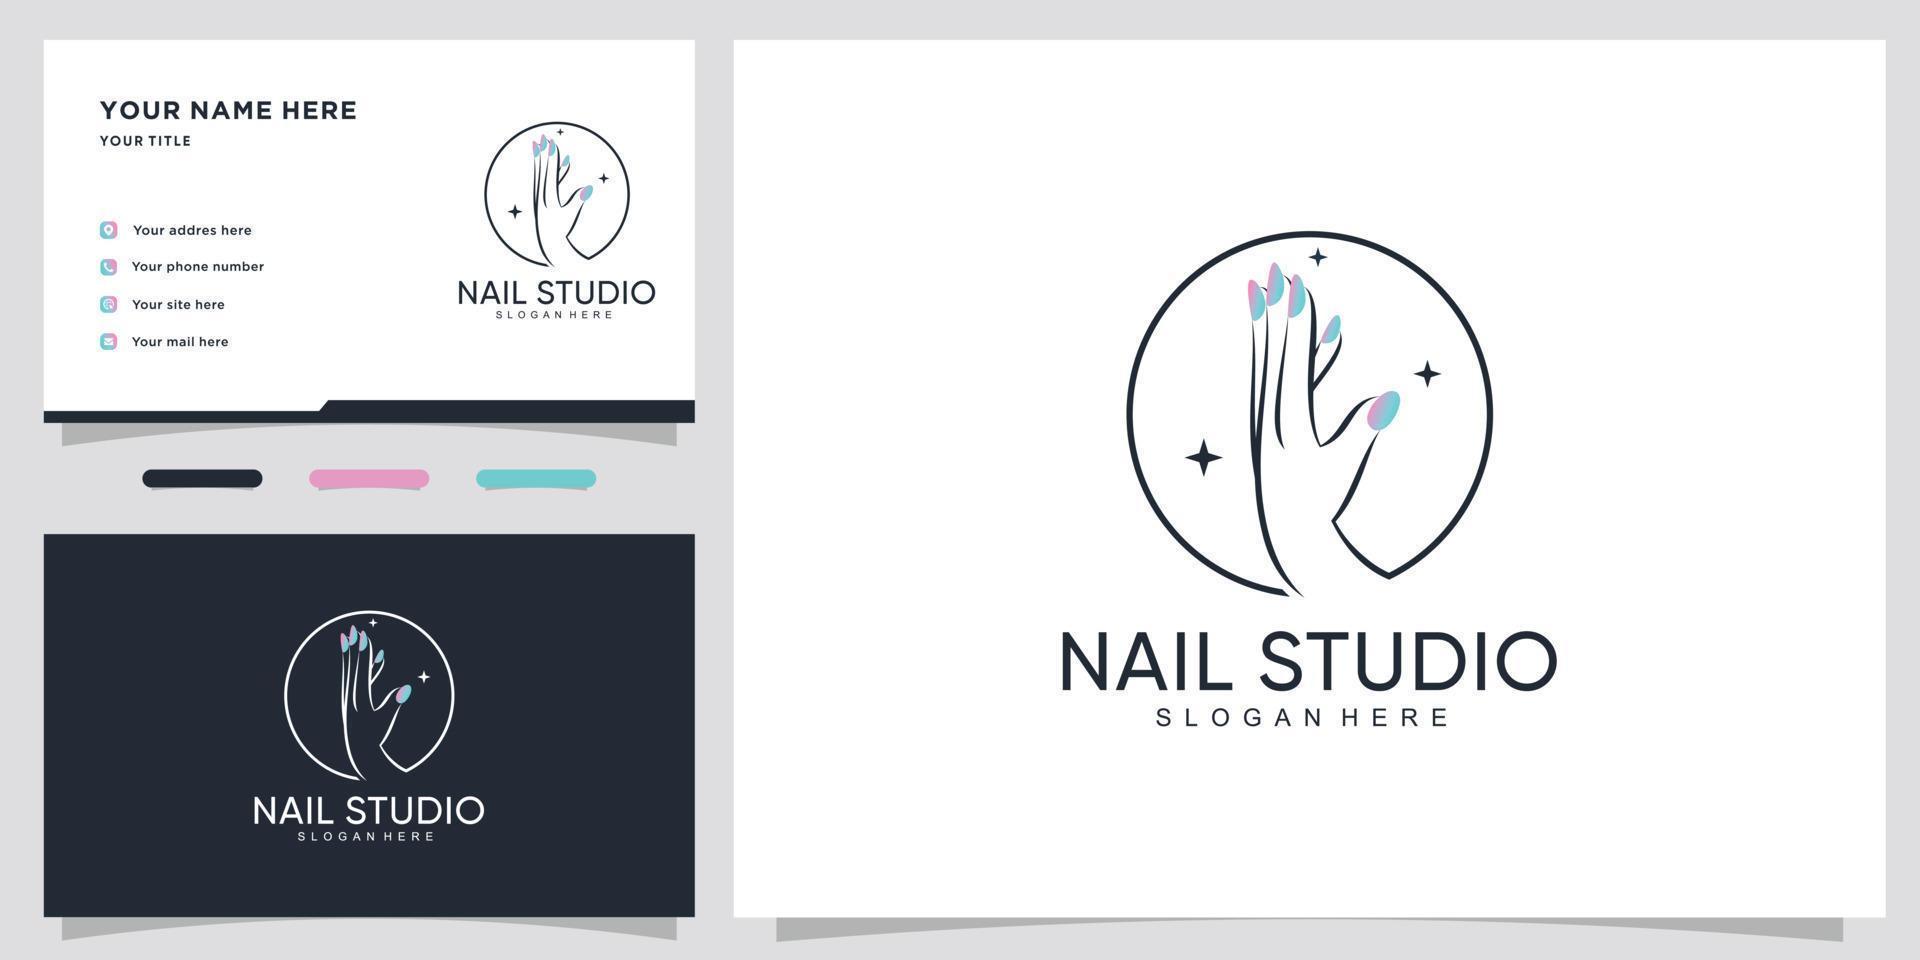 Nail studio logo design with creative concept and business card design Premium Vector